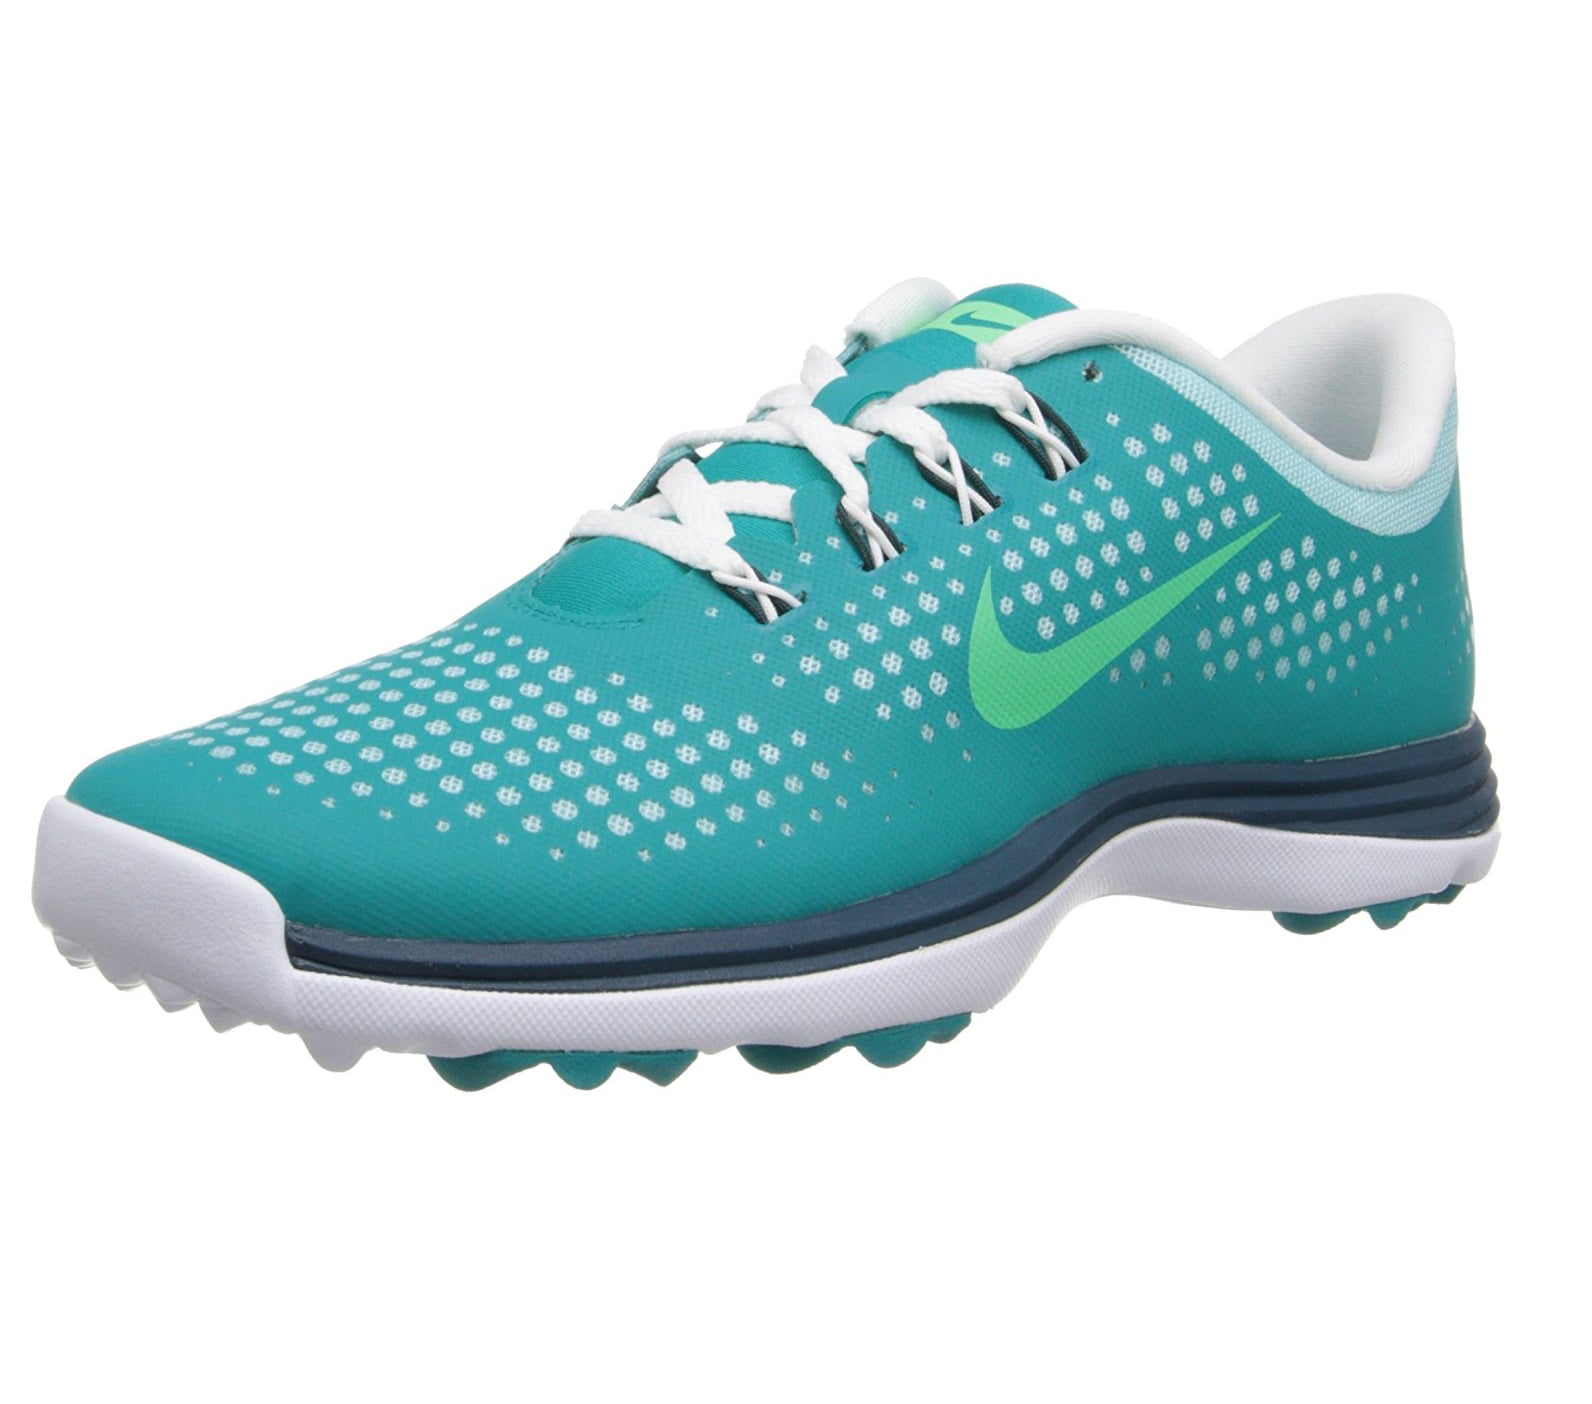 NEW Womens Nike Lunar Empress Turbo Green/Nightshade Golf Shoes 7.5 M ...